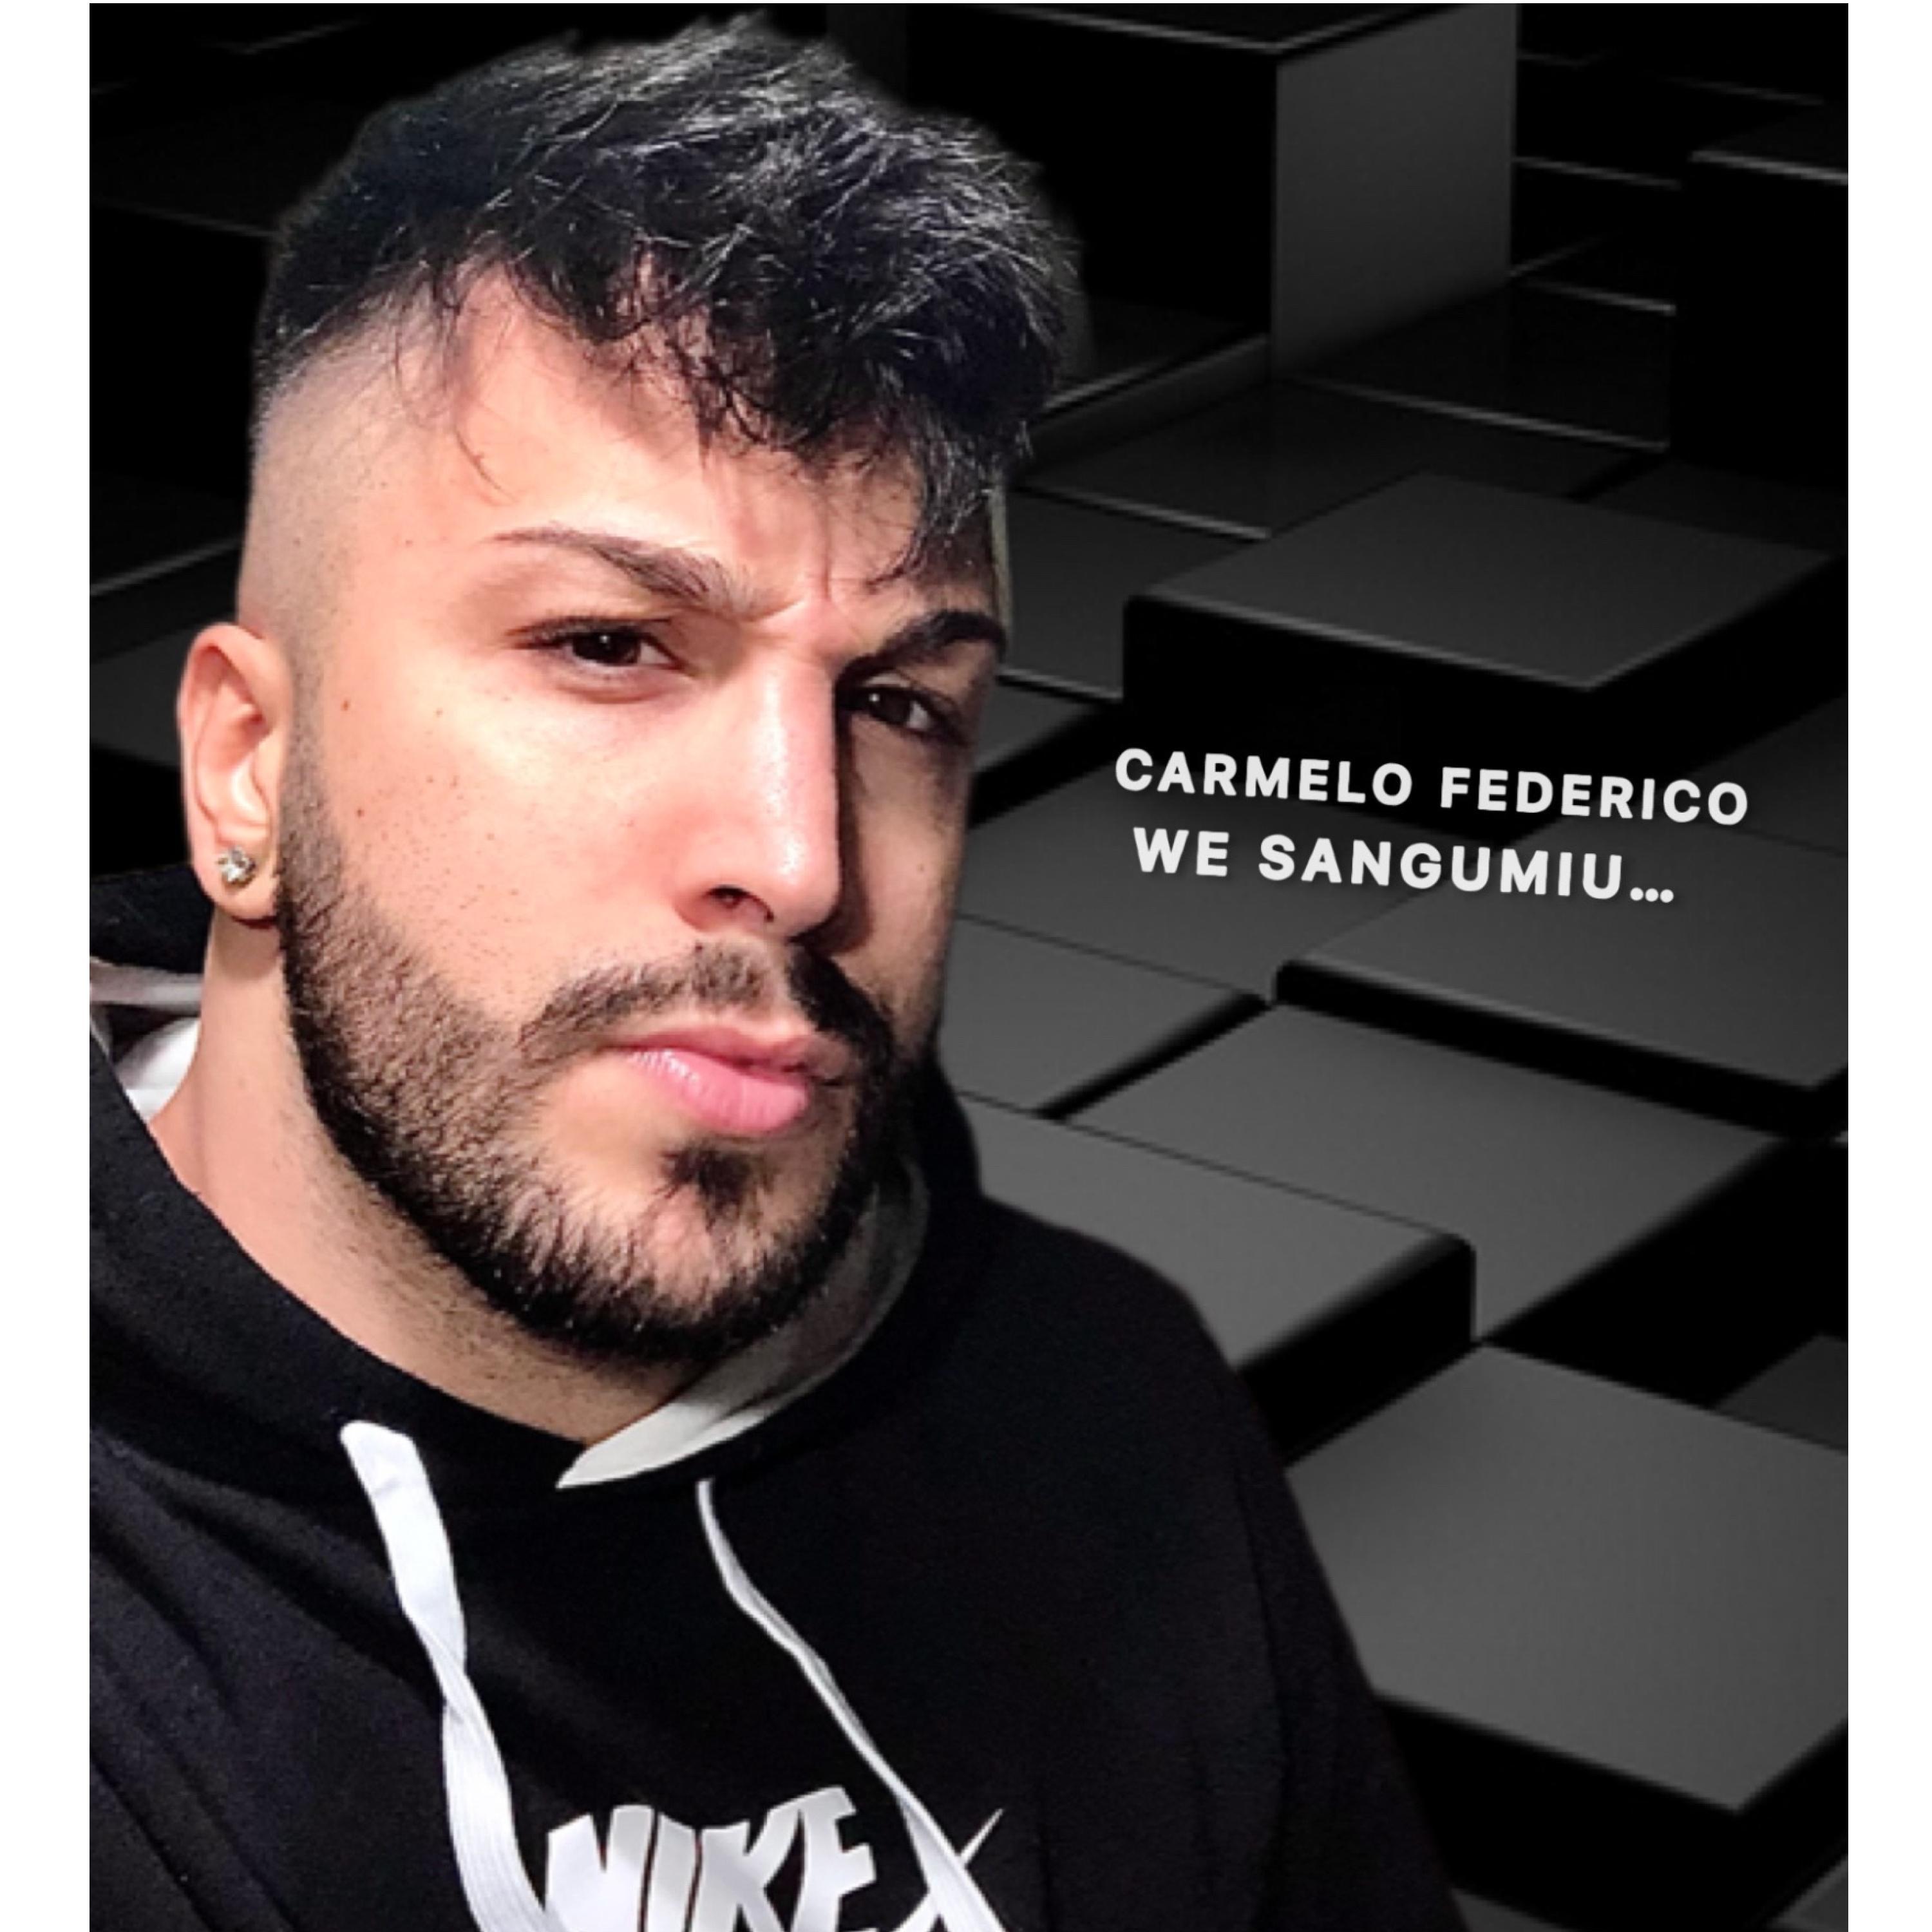 Carmelo Federico - We sangumiu...